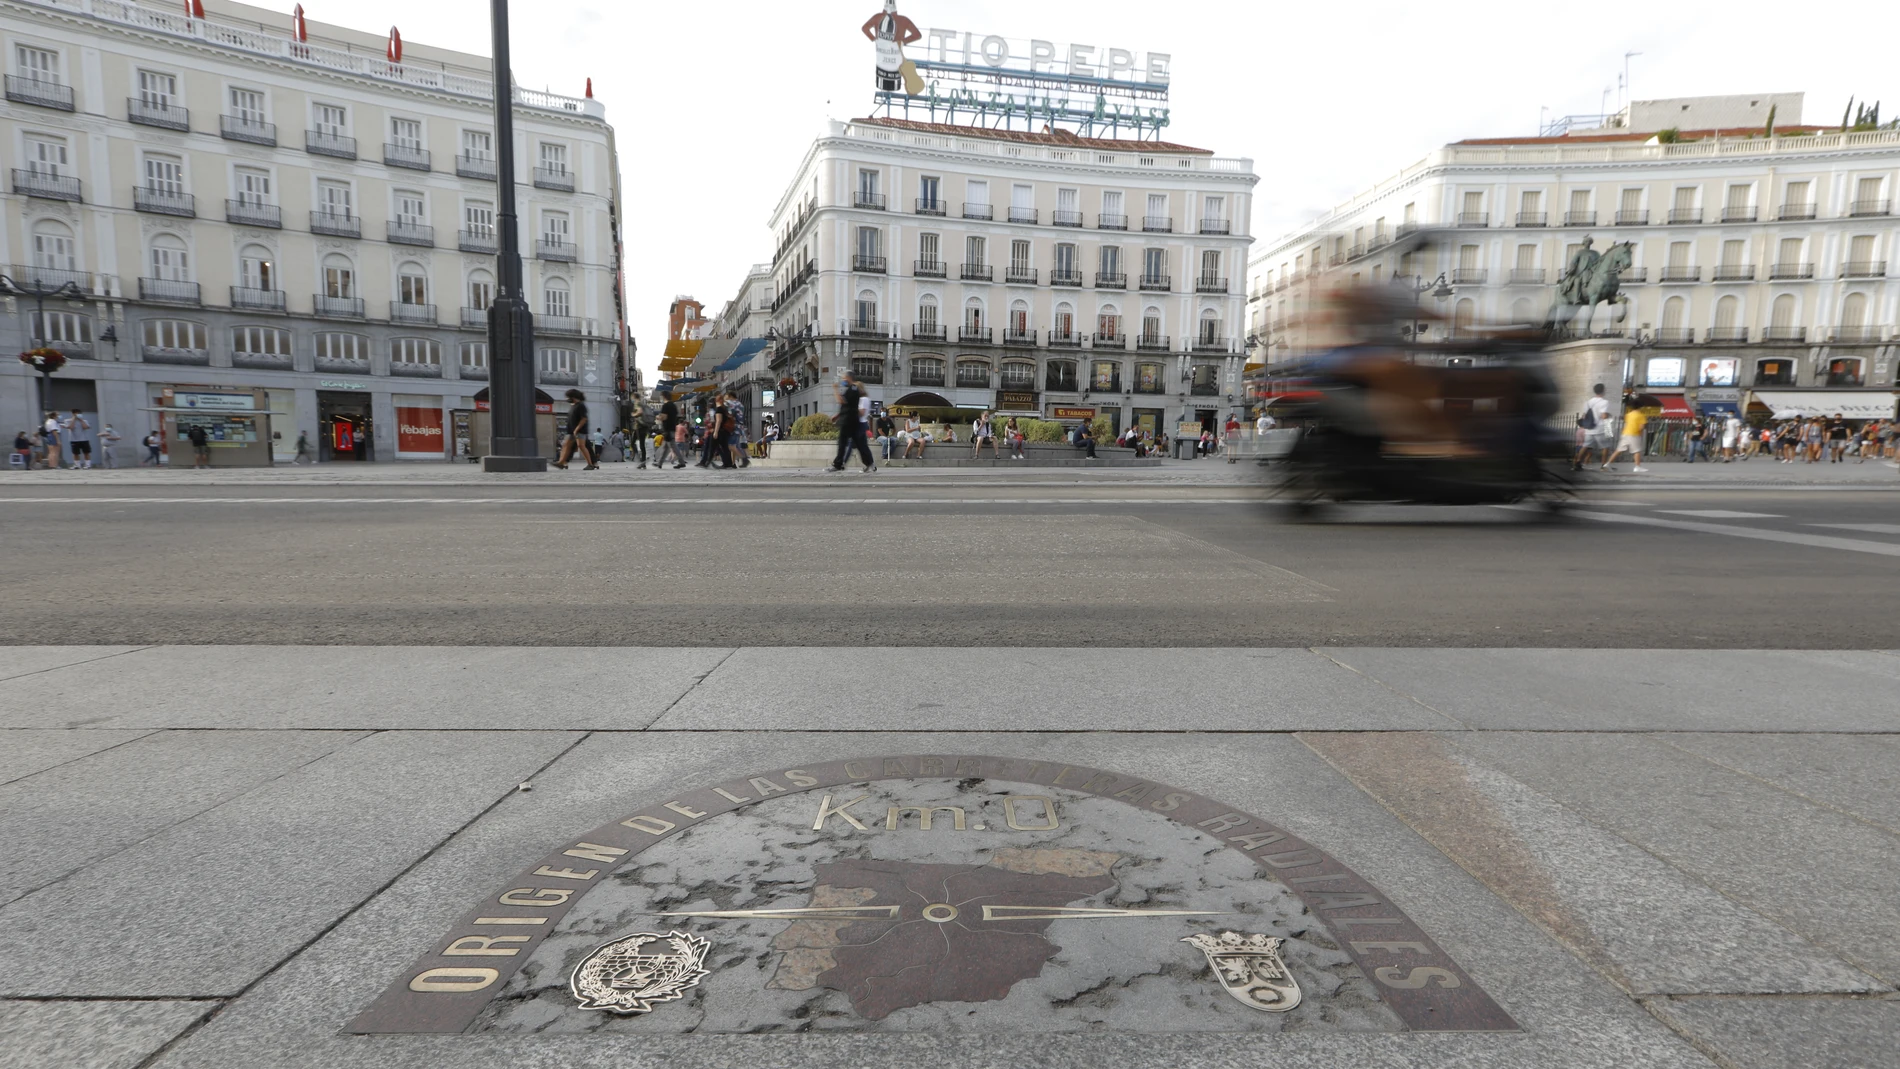 Imágenes del kilómetro 0 de la Puerta del Sol